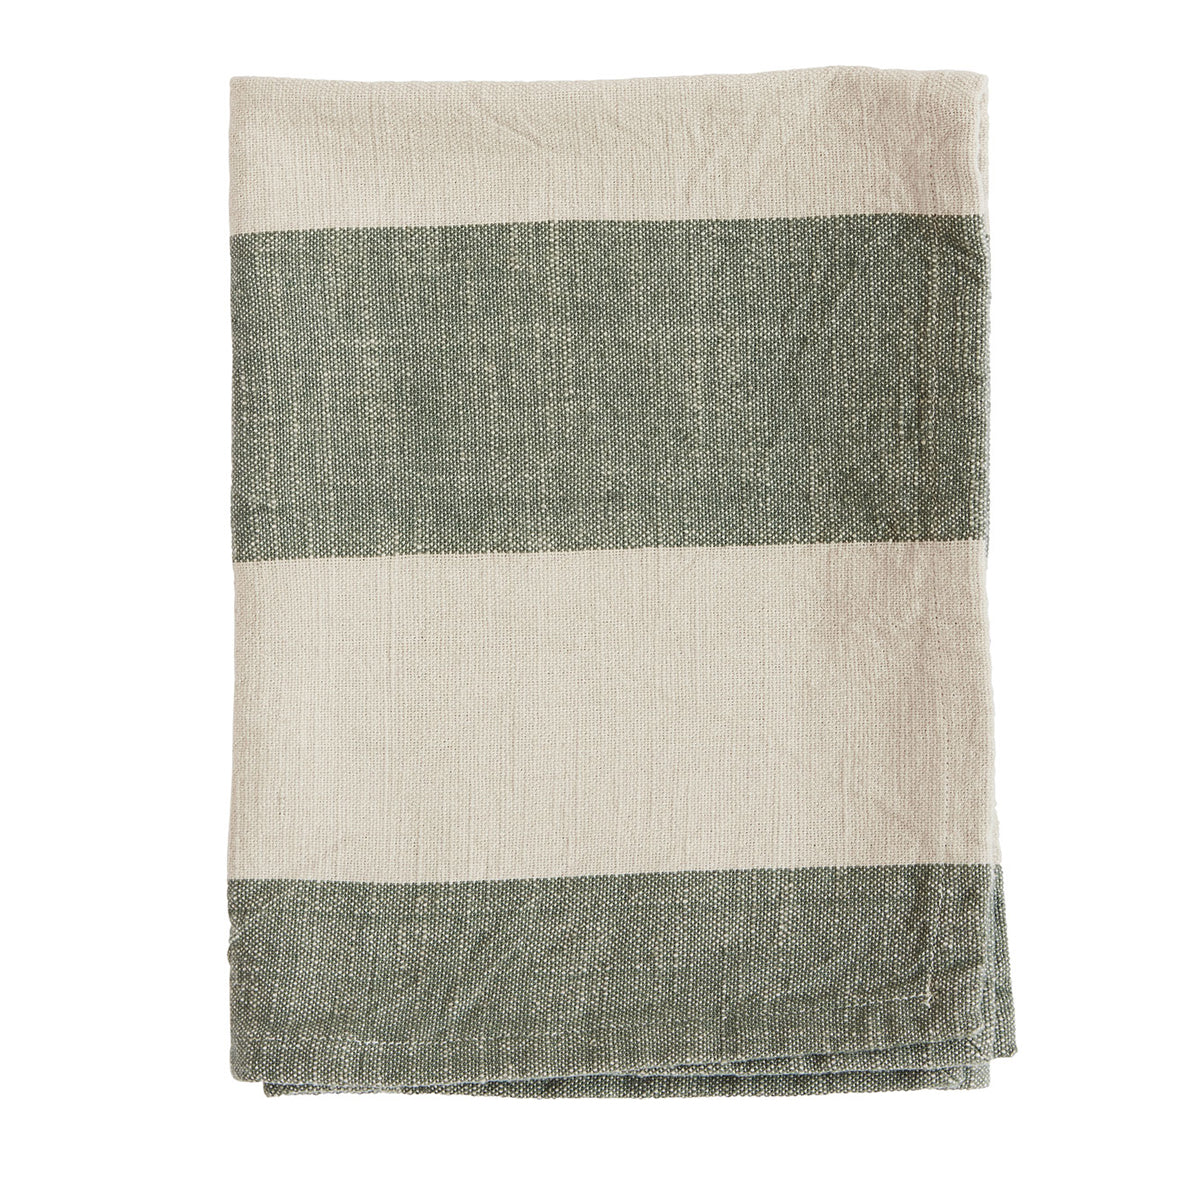 Cotton Kitchen Towel Stripe-Woven Leaf